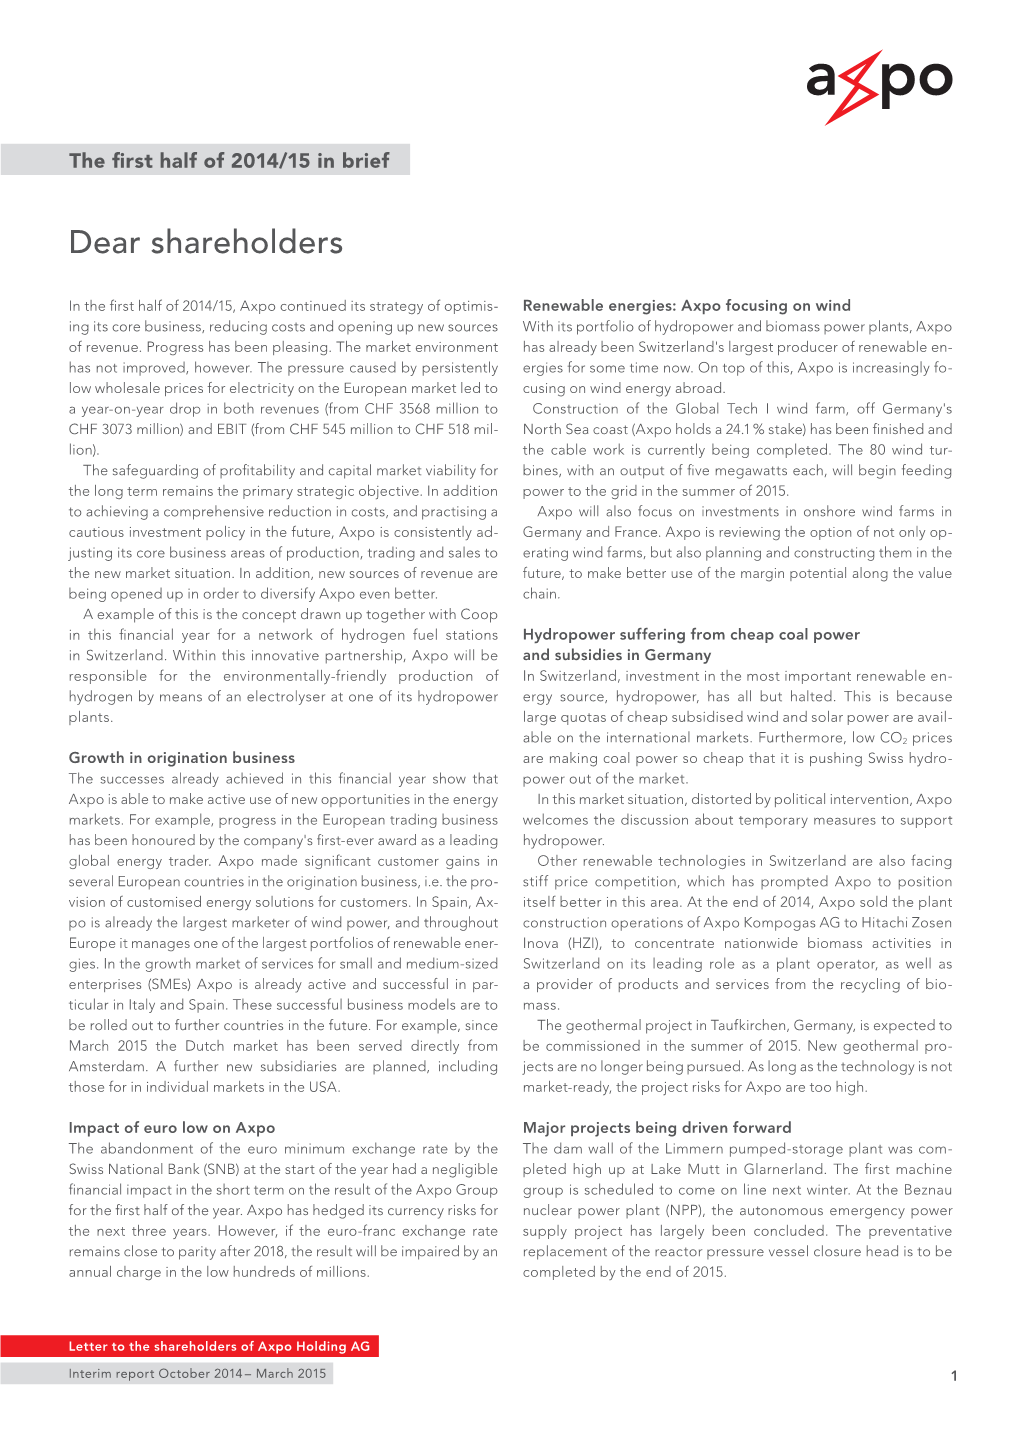 Dear Shareholders